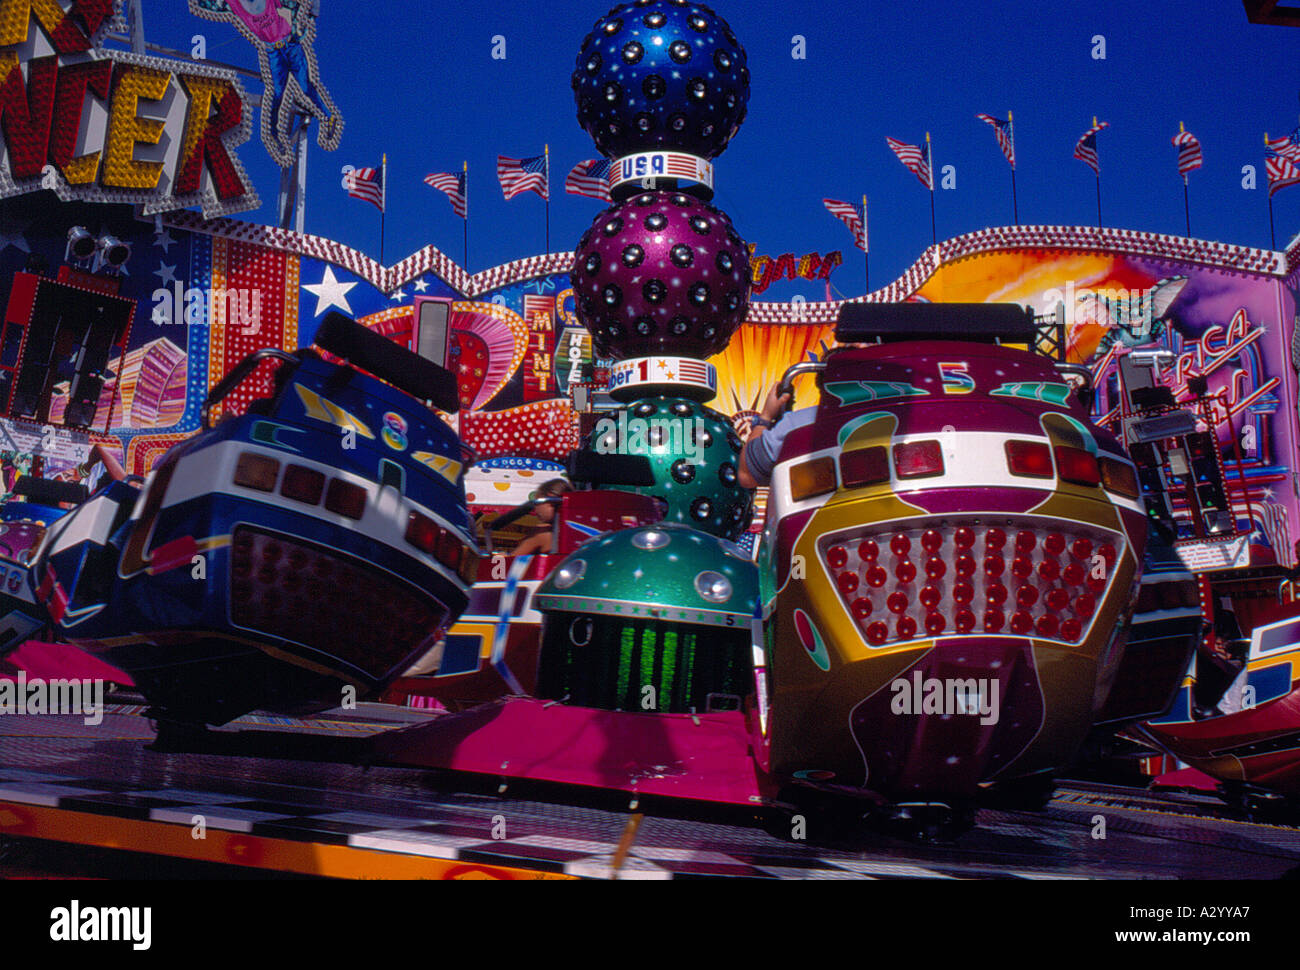 Break dance ride fun fair hi-res stock photography and images - Alamy